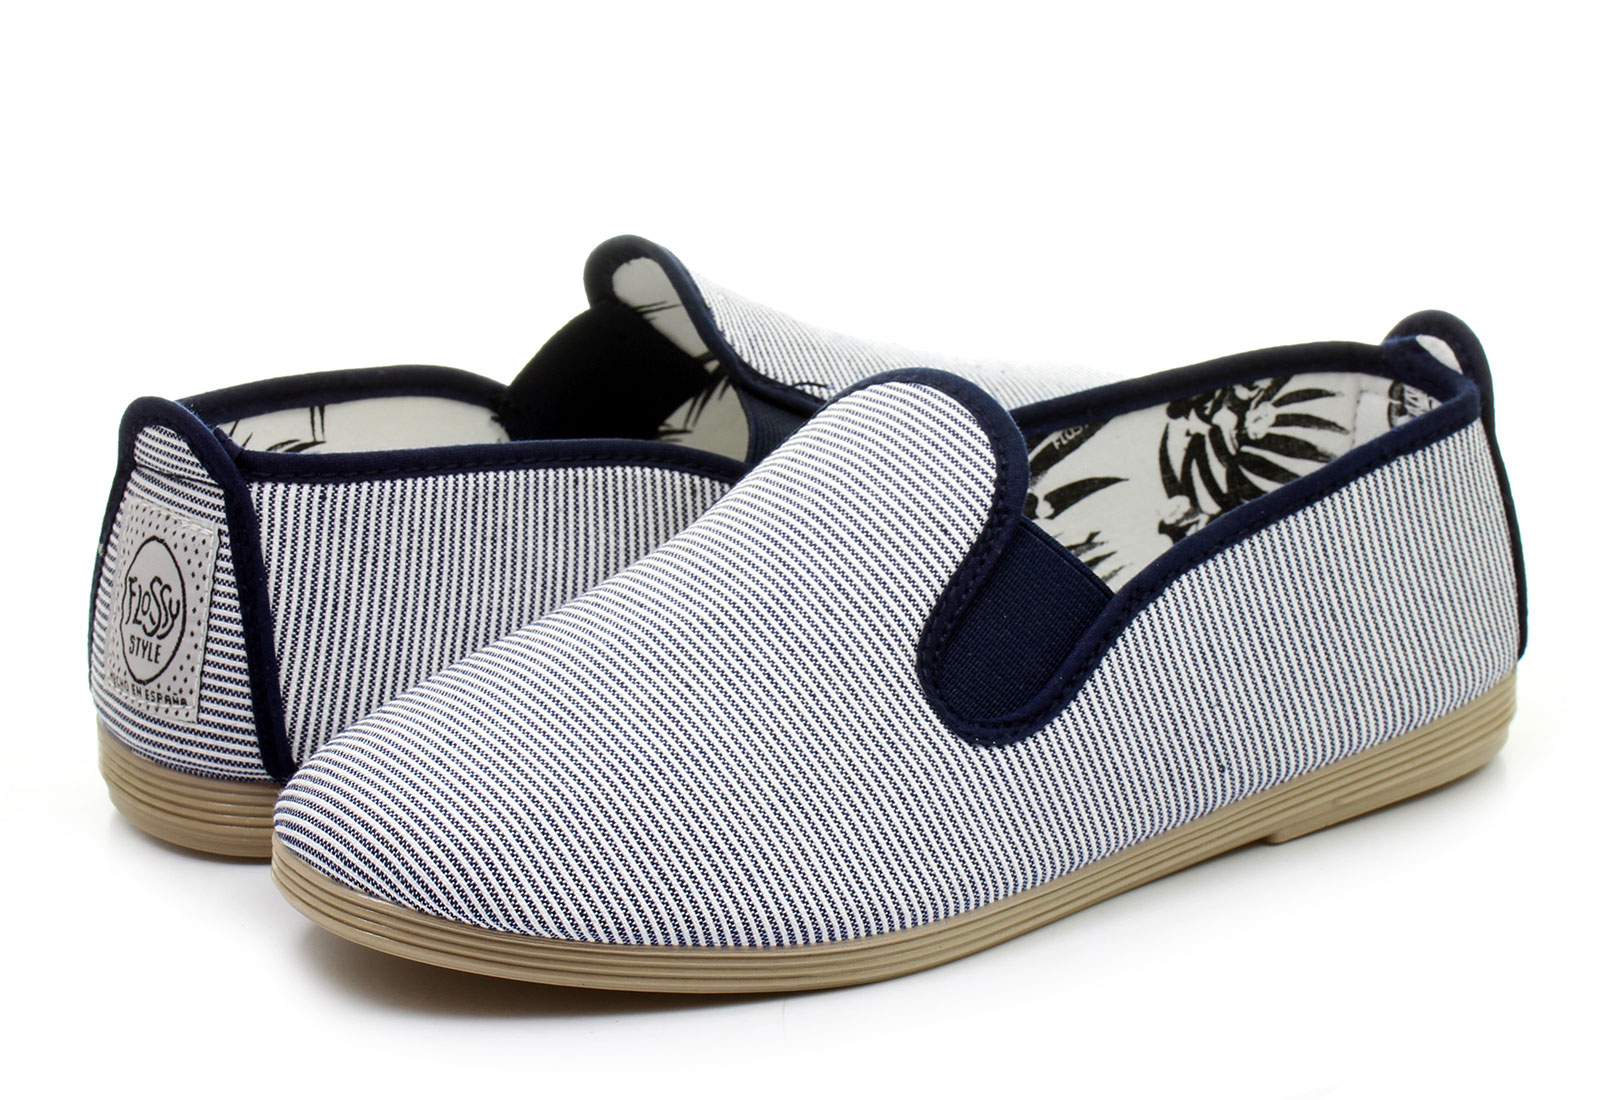 Flossy Shoes - San Javier - sanjavw-102 - Online shop for sneakers ...